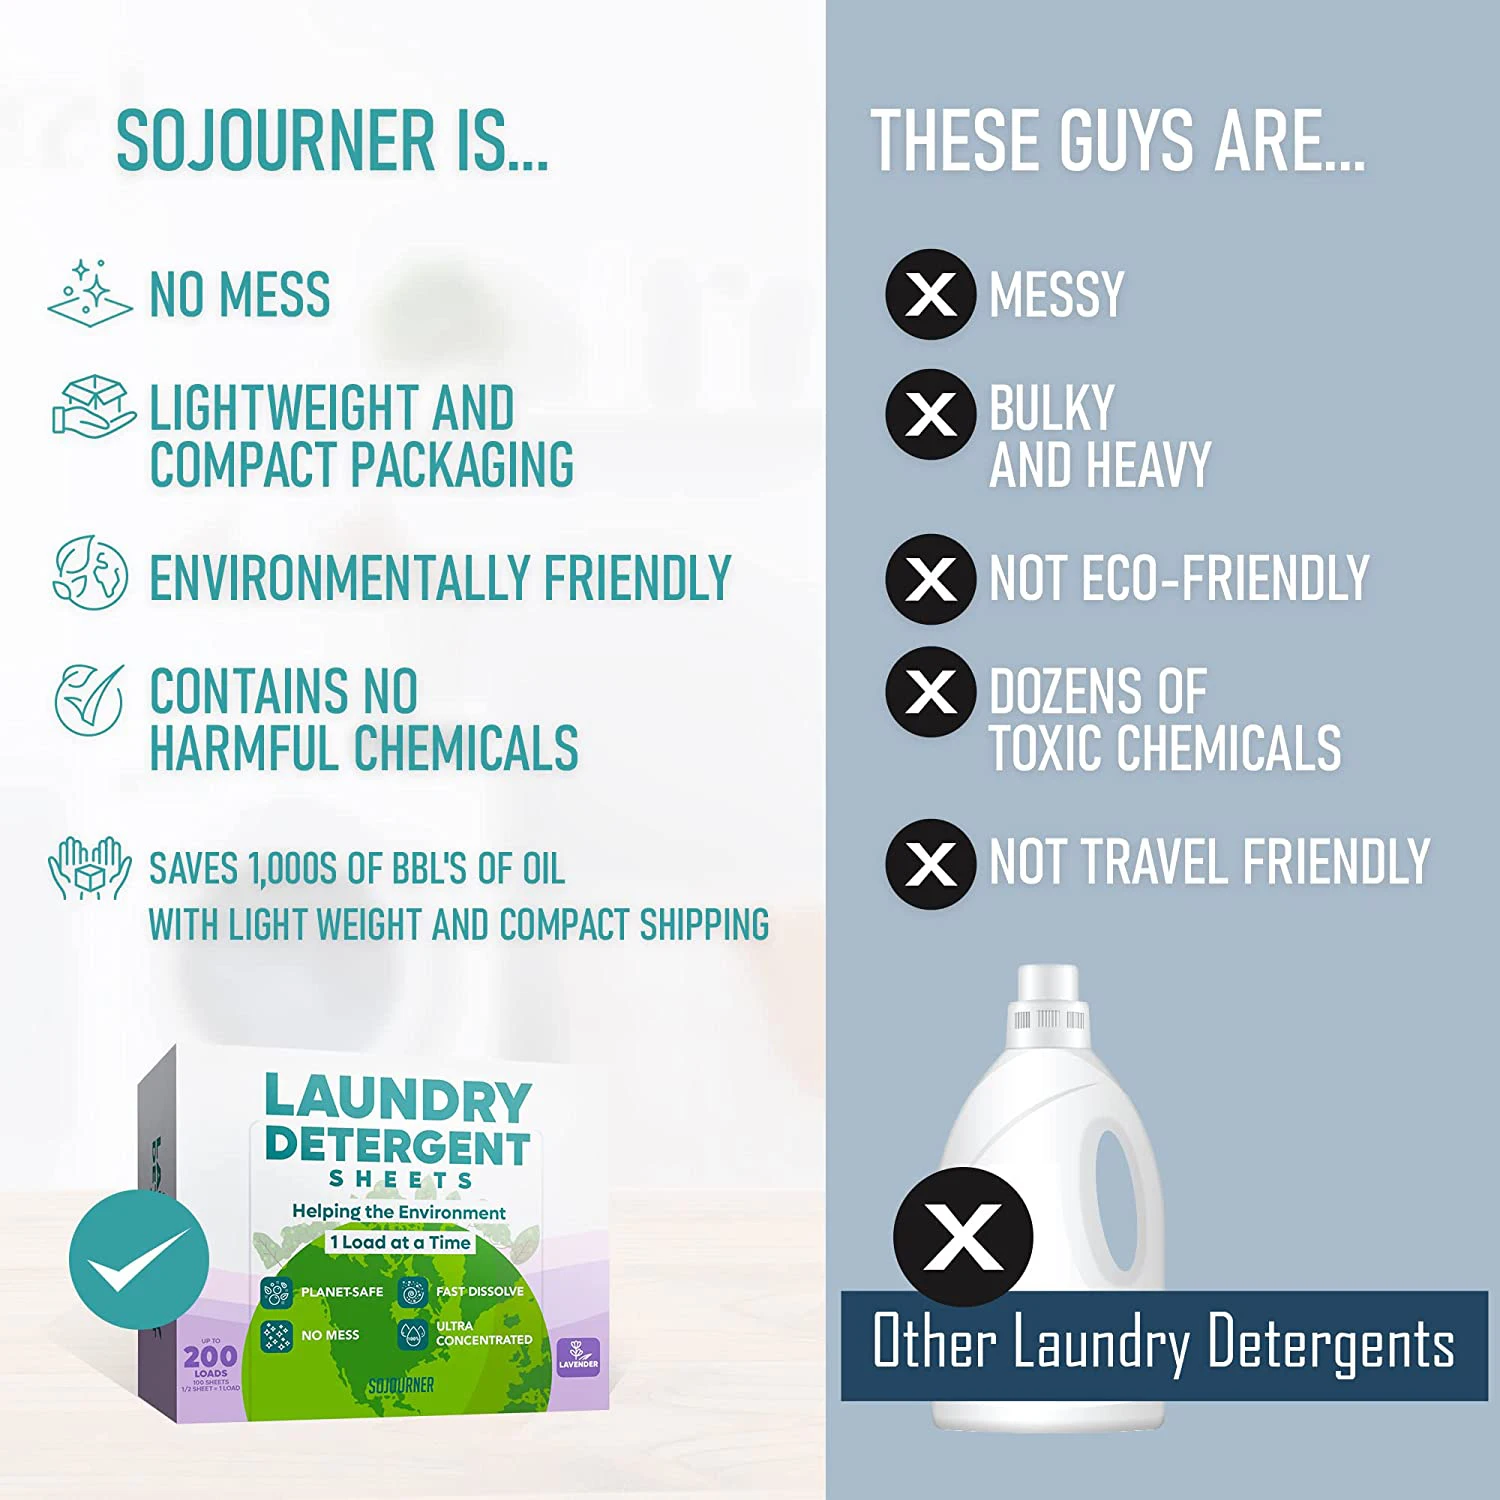 Amazon Ebay Supplier Free Sample Laundry Detergent Sheets